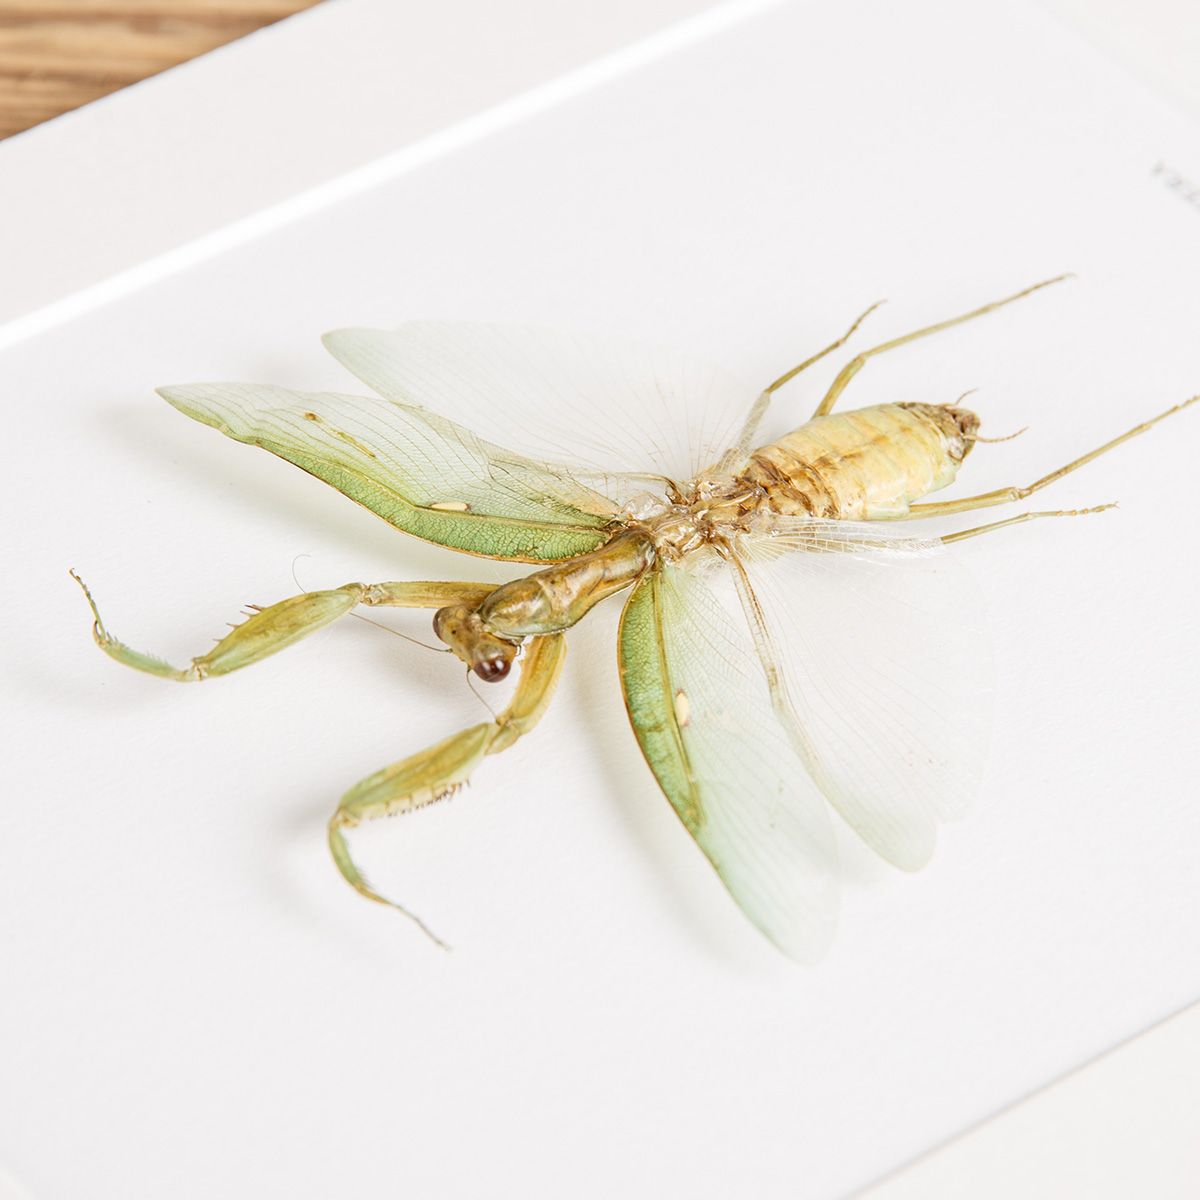 The Indochina Mantis in Box Frame (Hierodula patellifera)